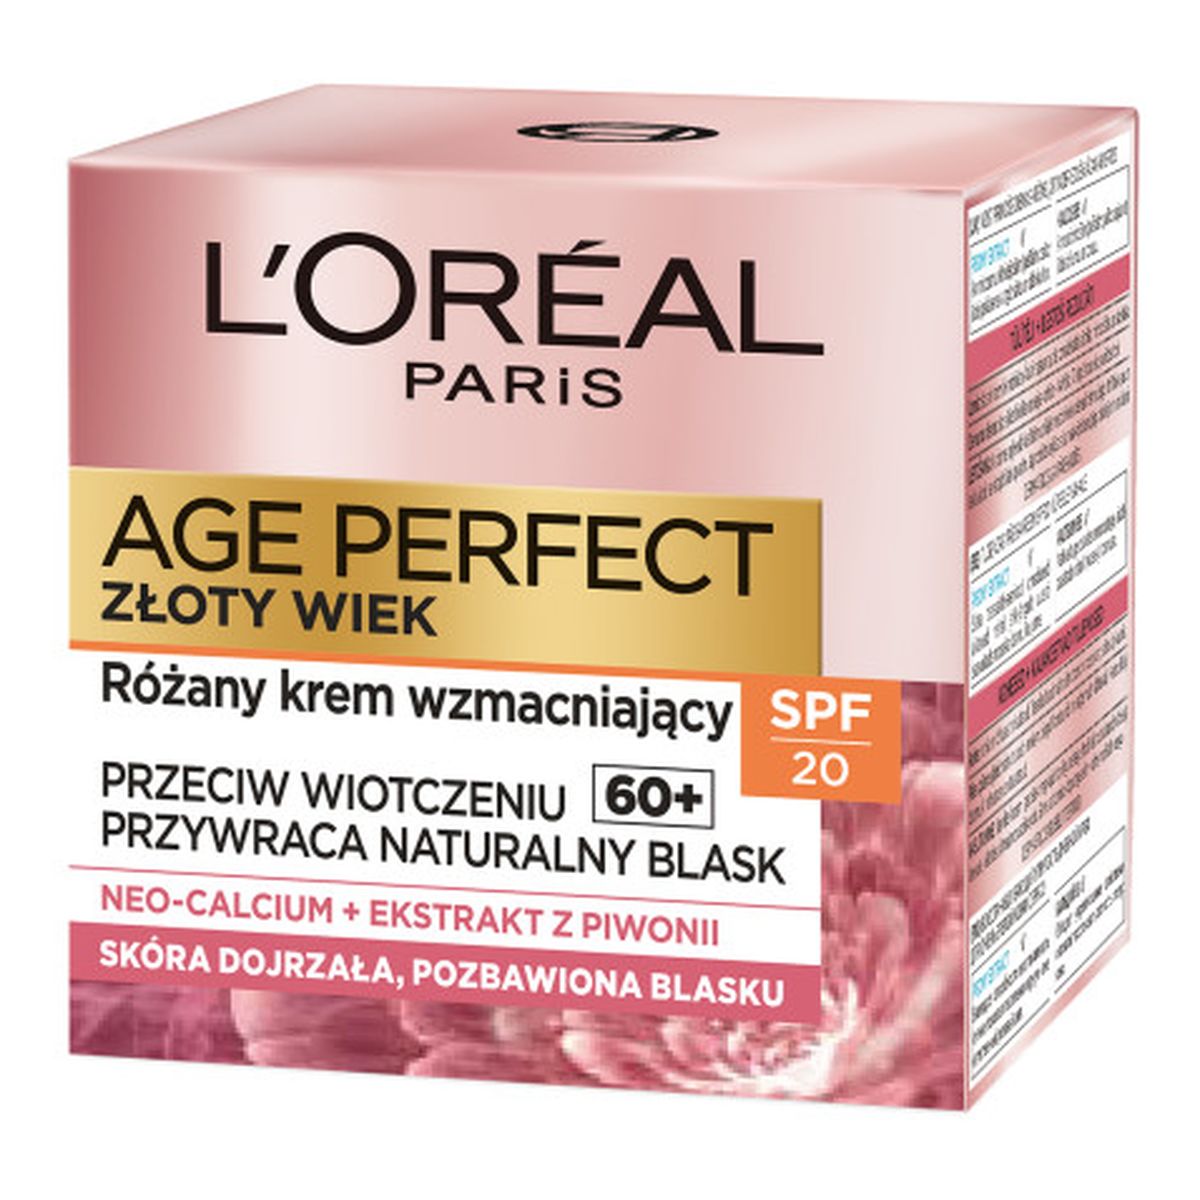 L'Oreal Paris Age Perfect Golden Age 60+ różany Krem na dzień spf20 50ml